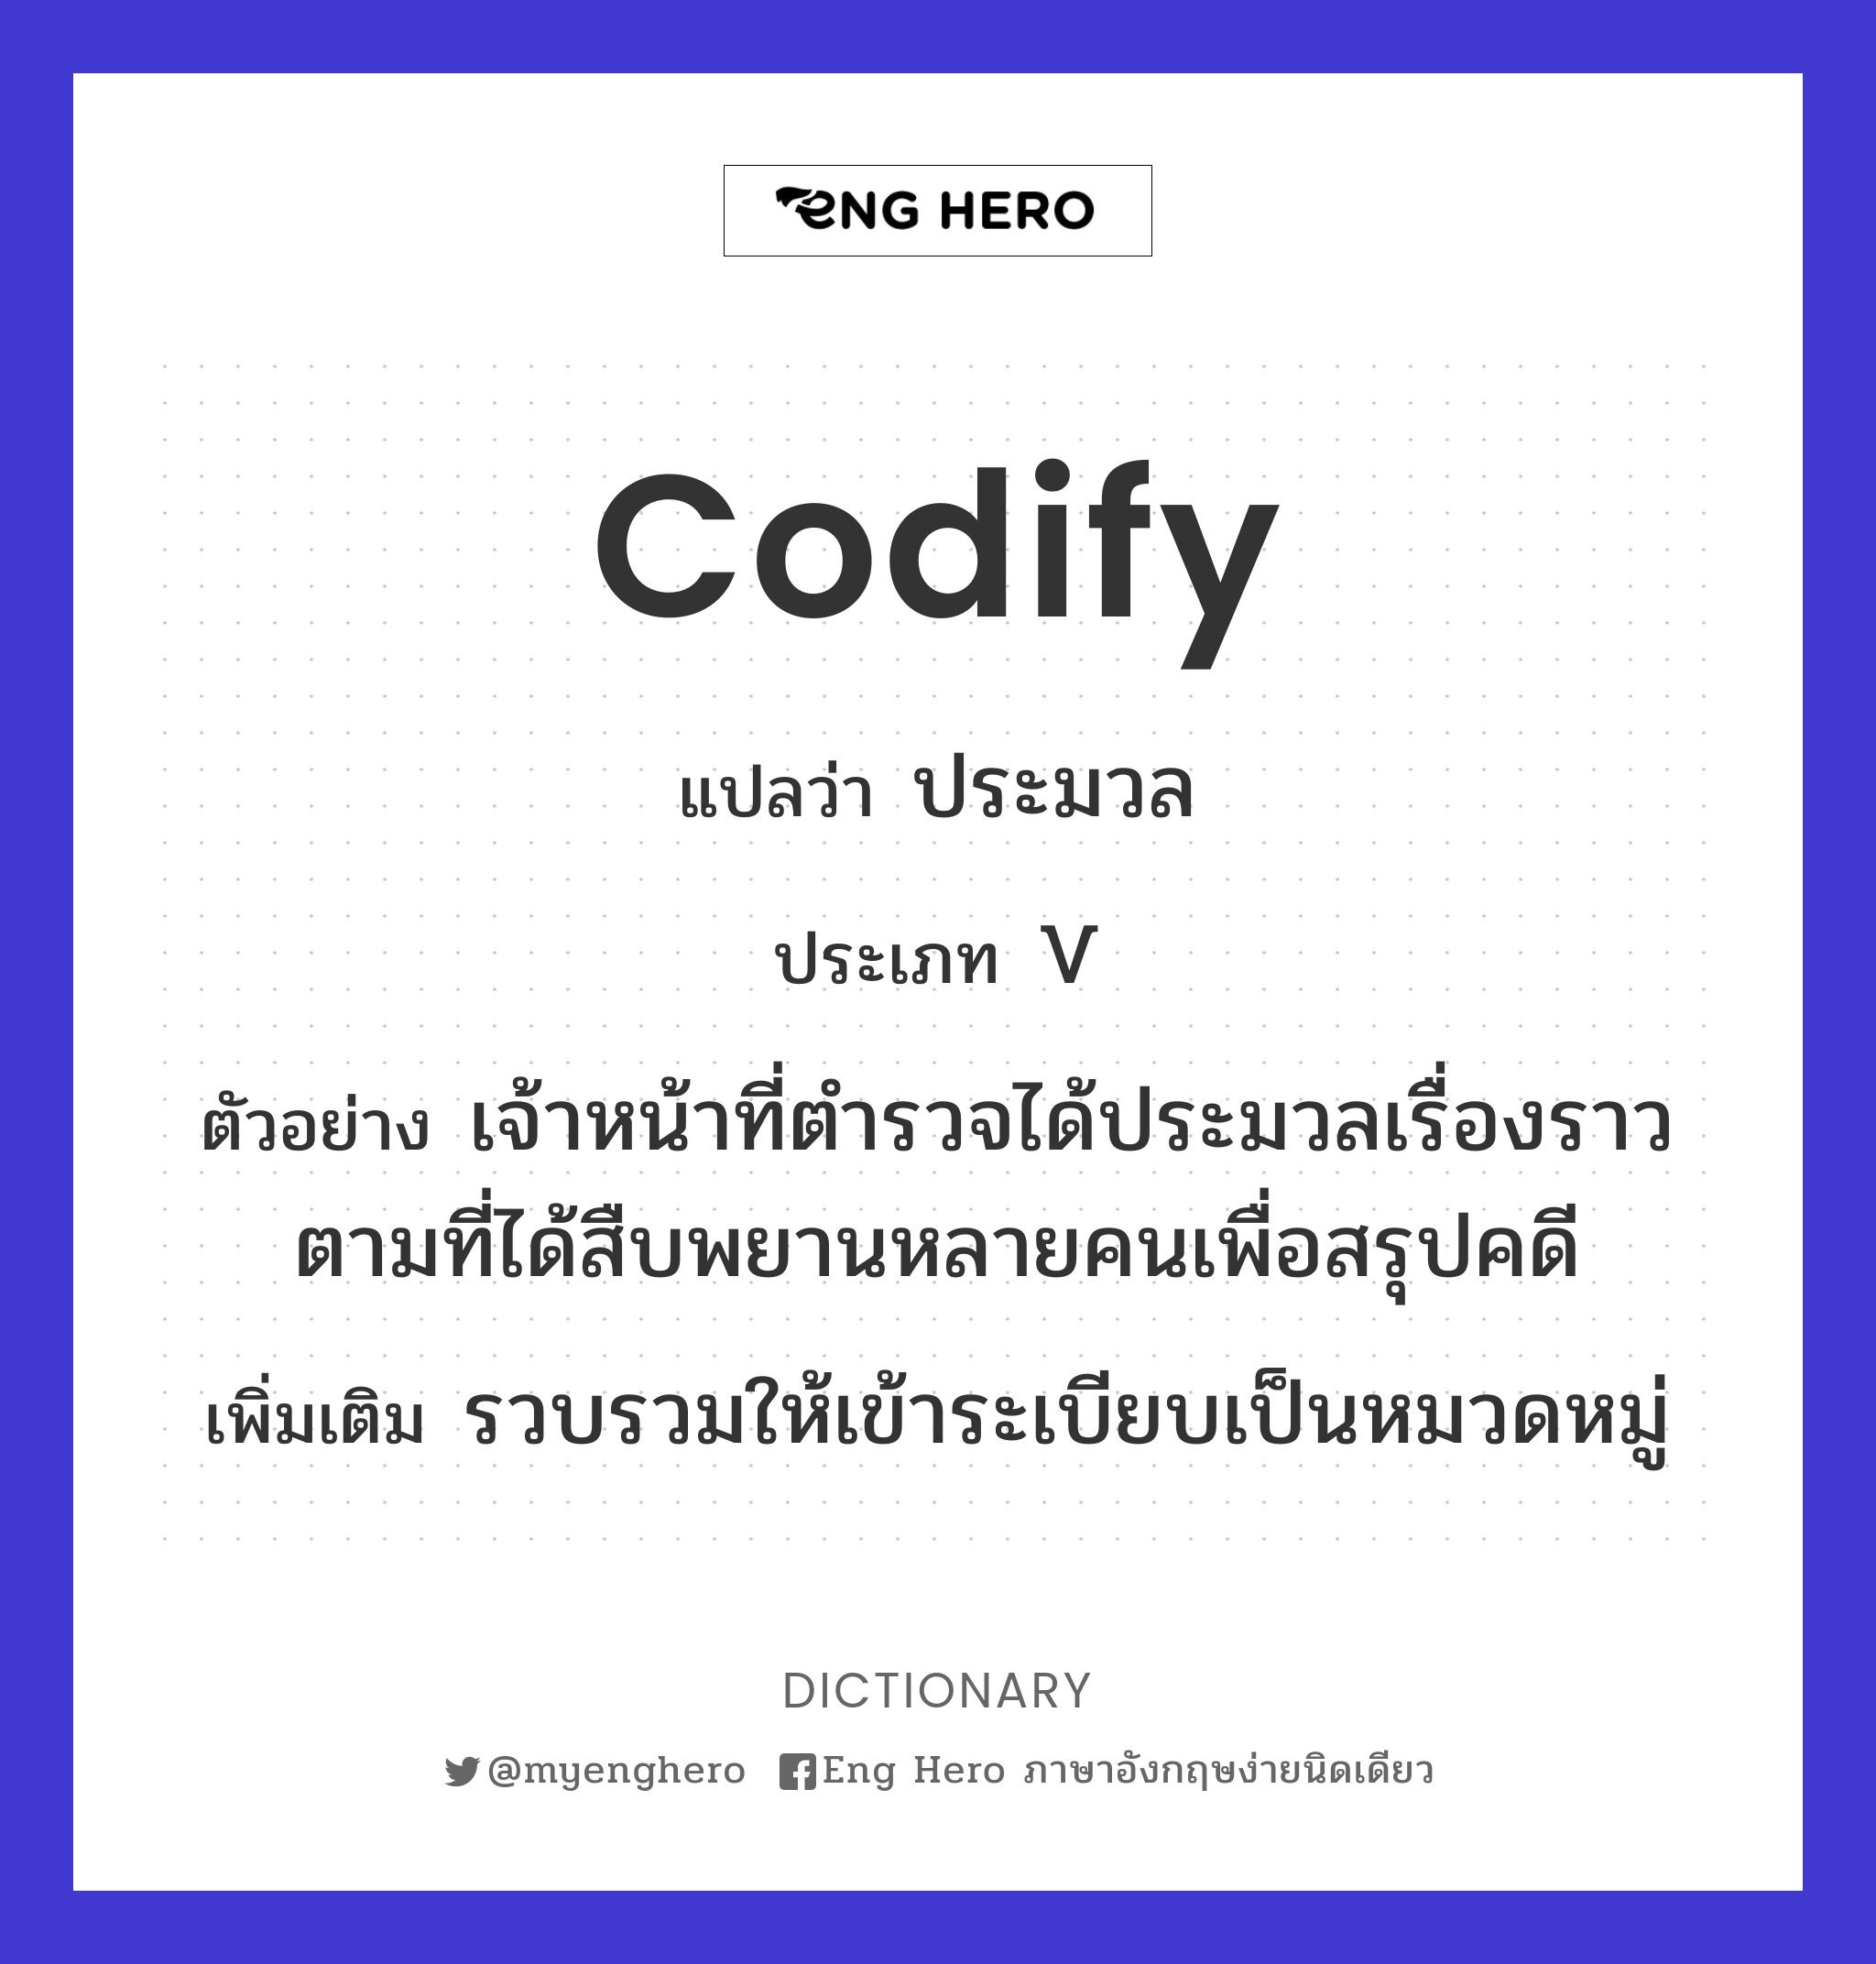 codify